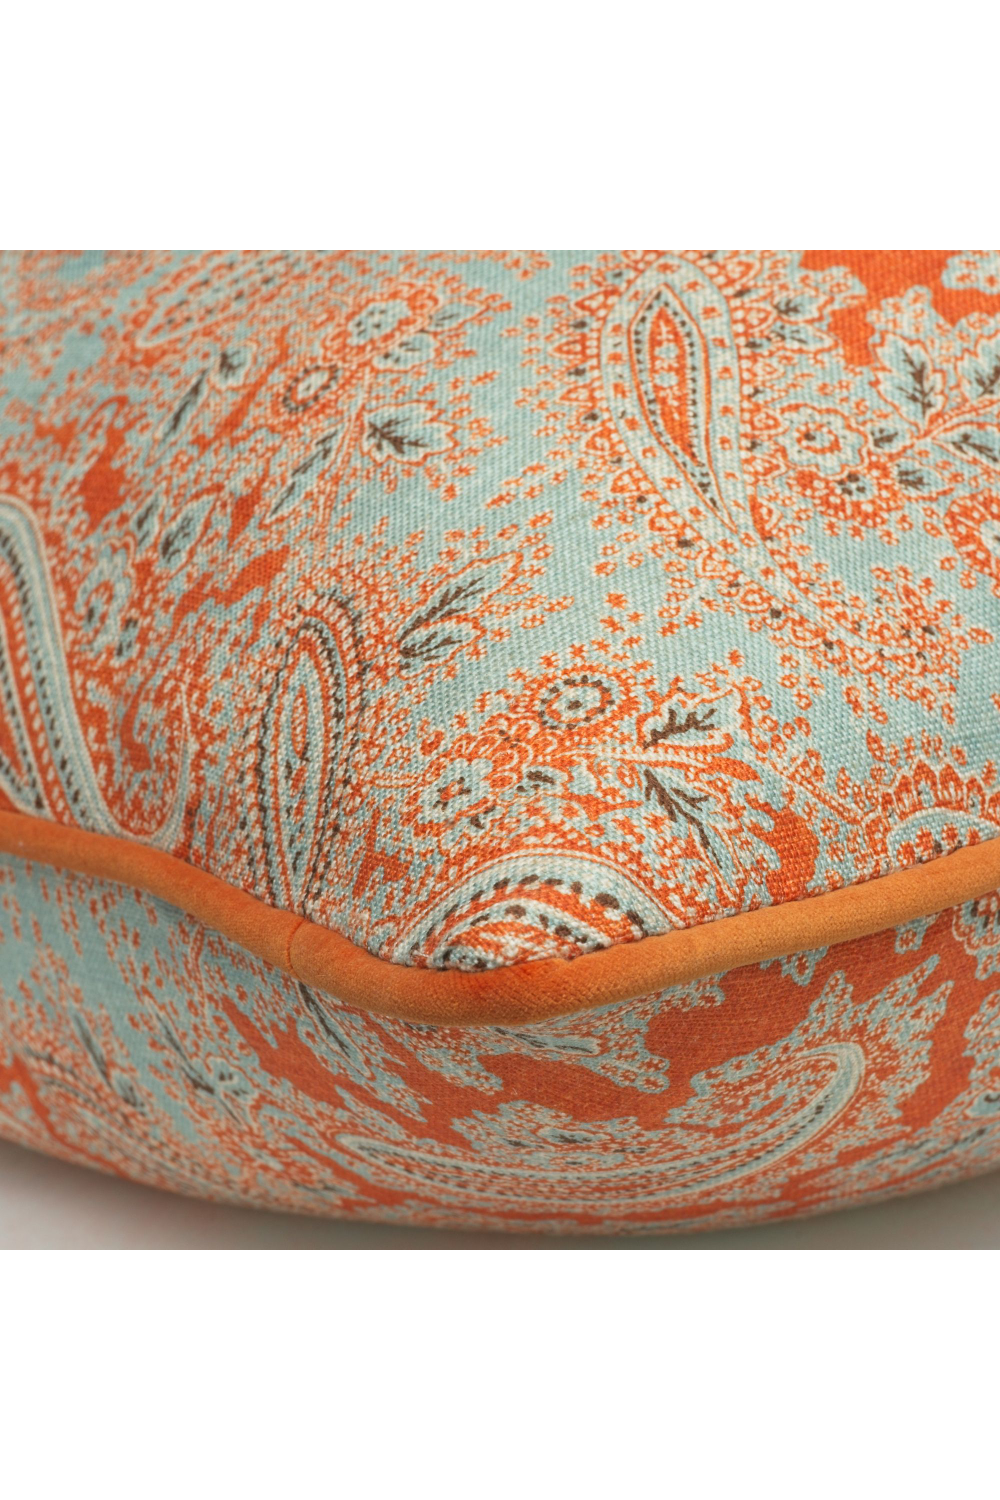 Orange Paisley Print Outdoor Cushion | Andrew Martin Gazebo | Oroa.com